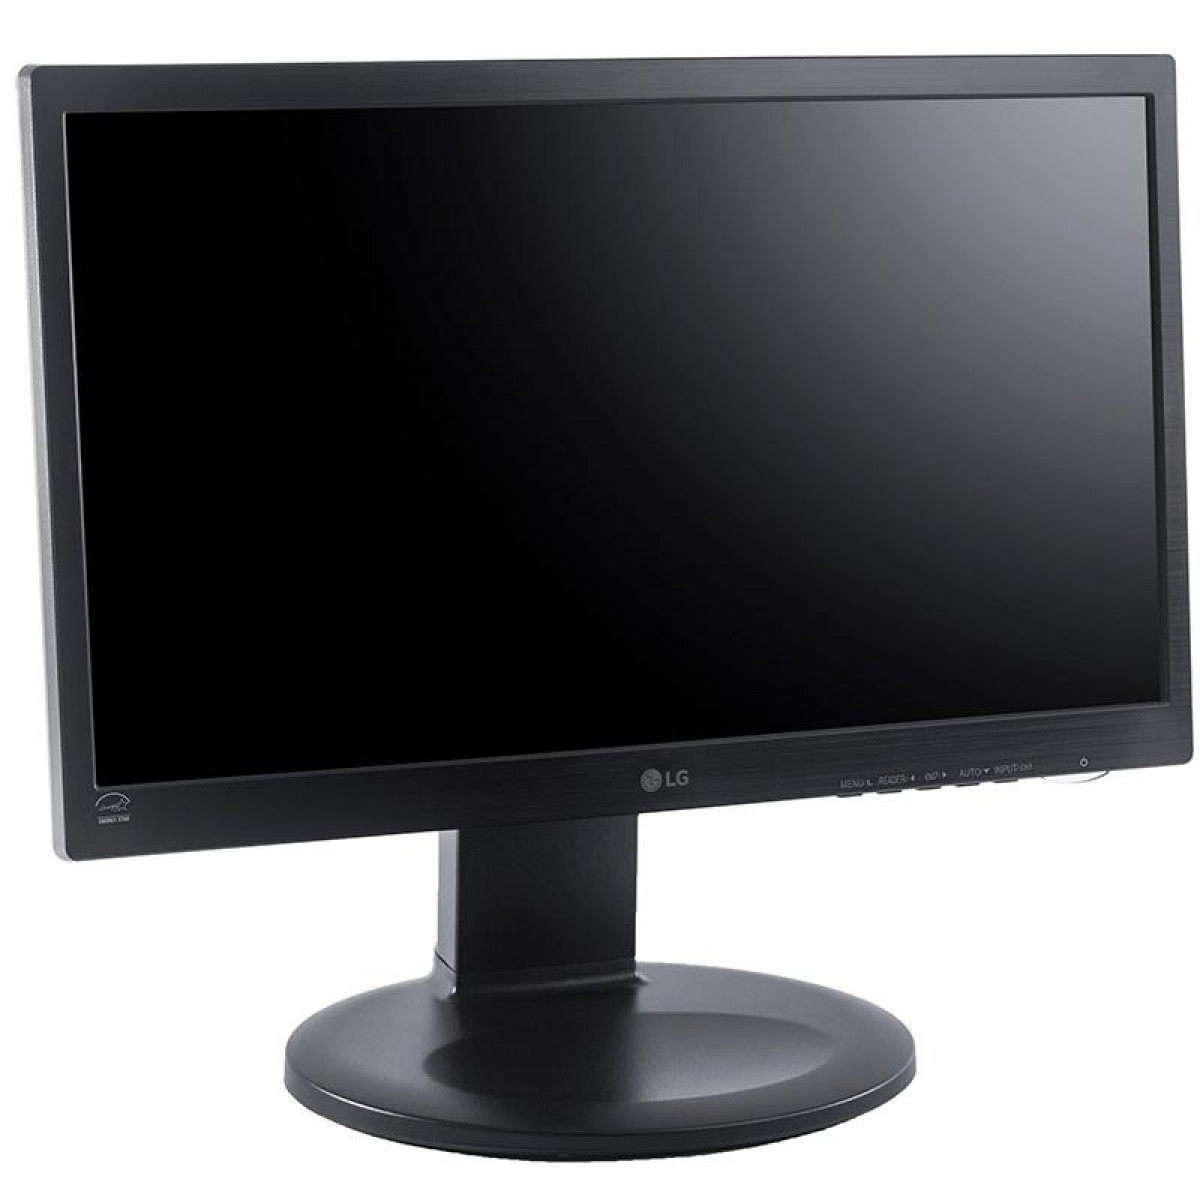 Monitor Gamer LG 19,5 Pol, LCD, HDMI, 20M35PH